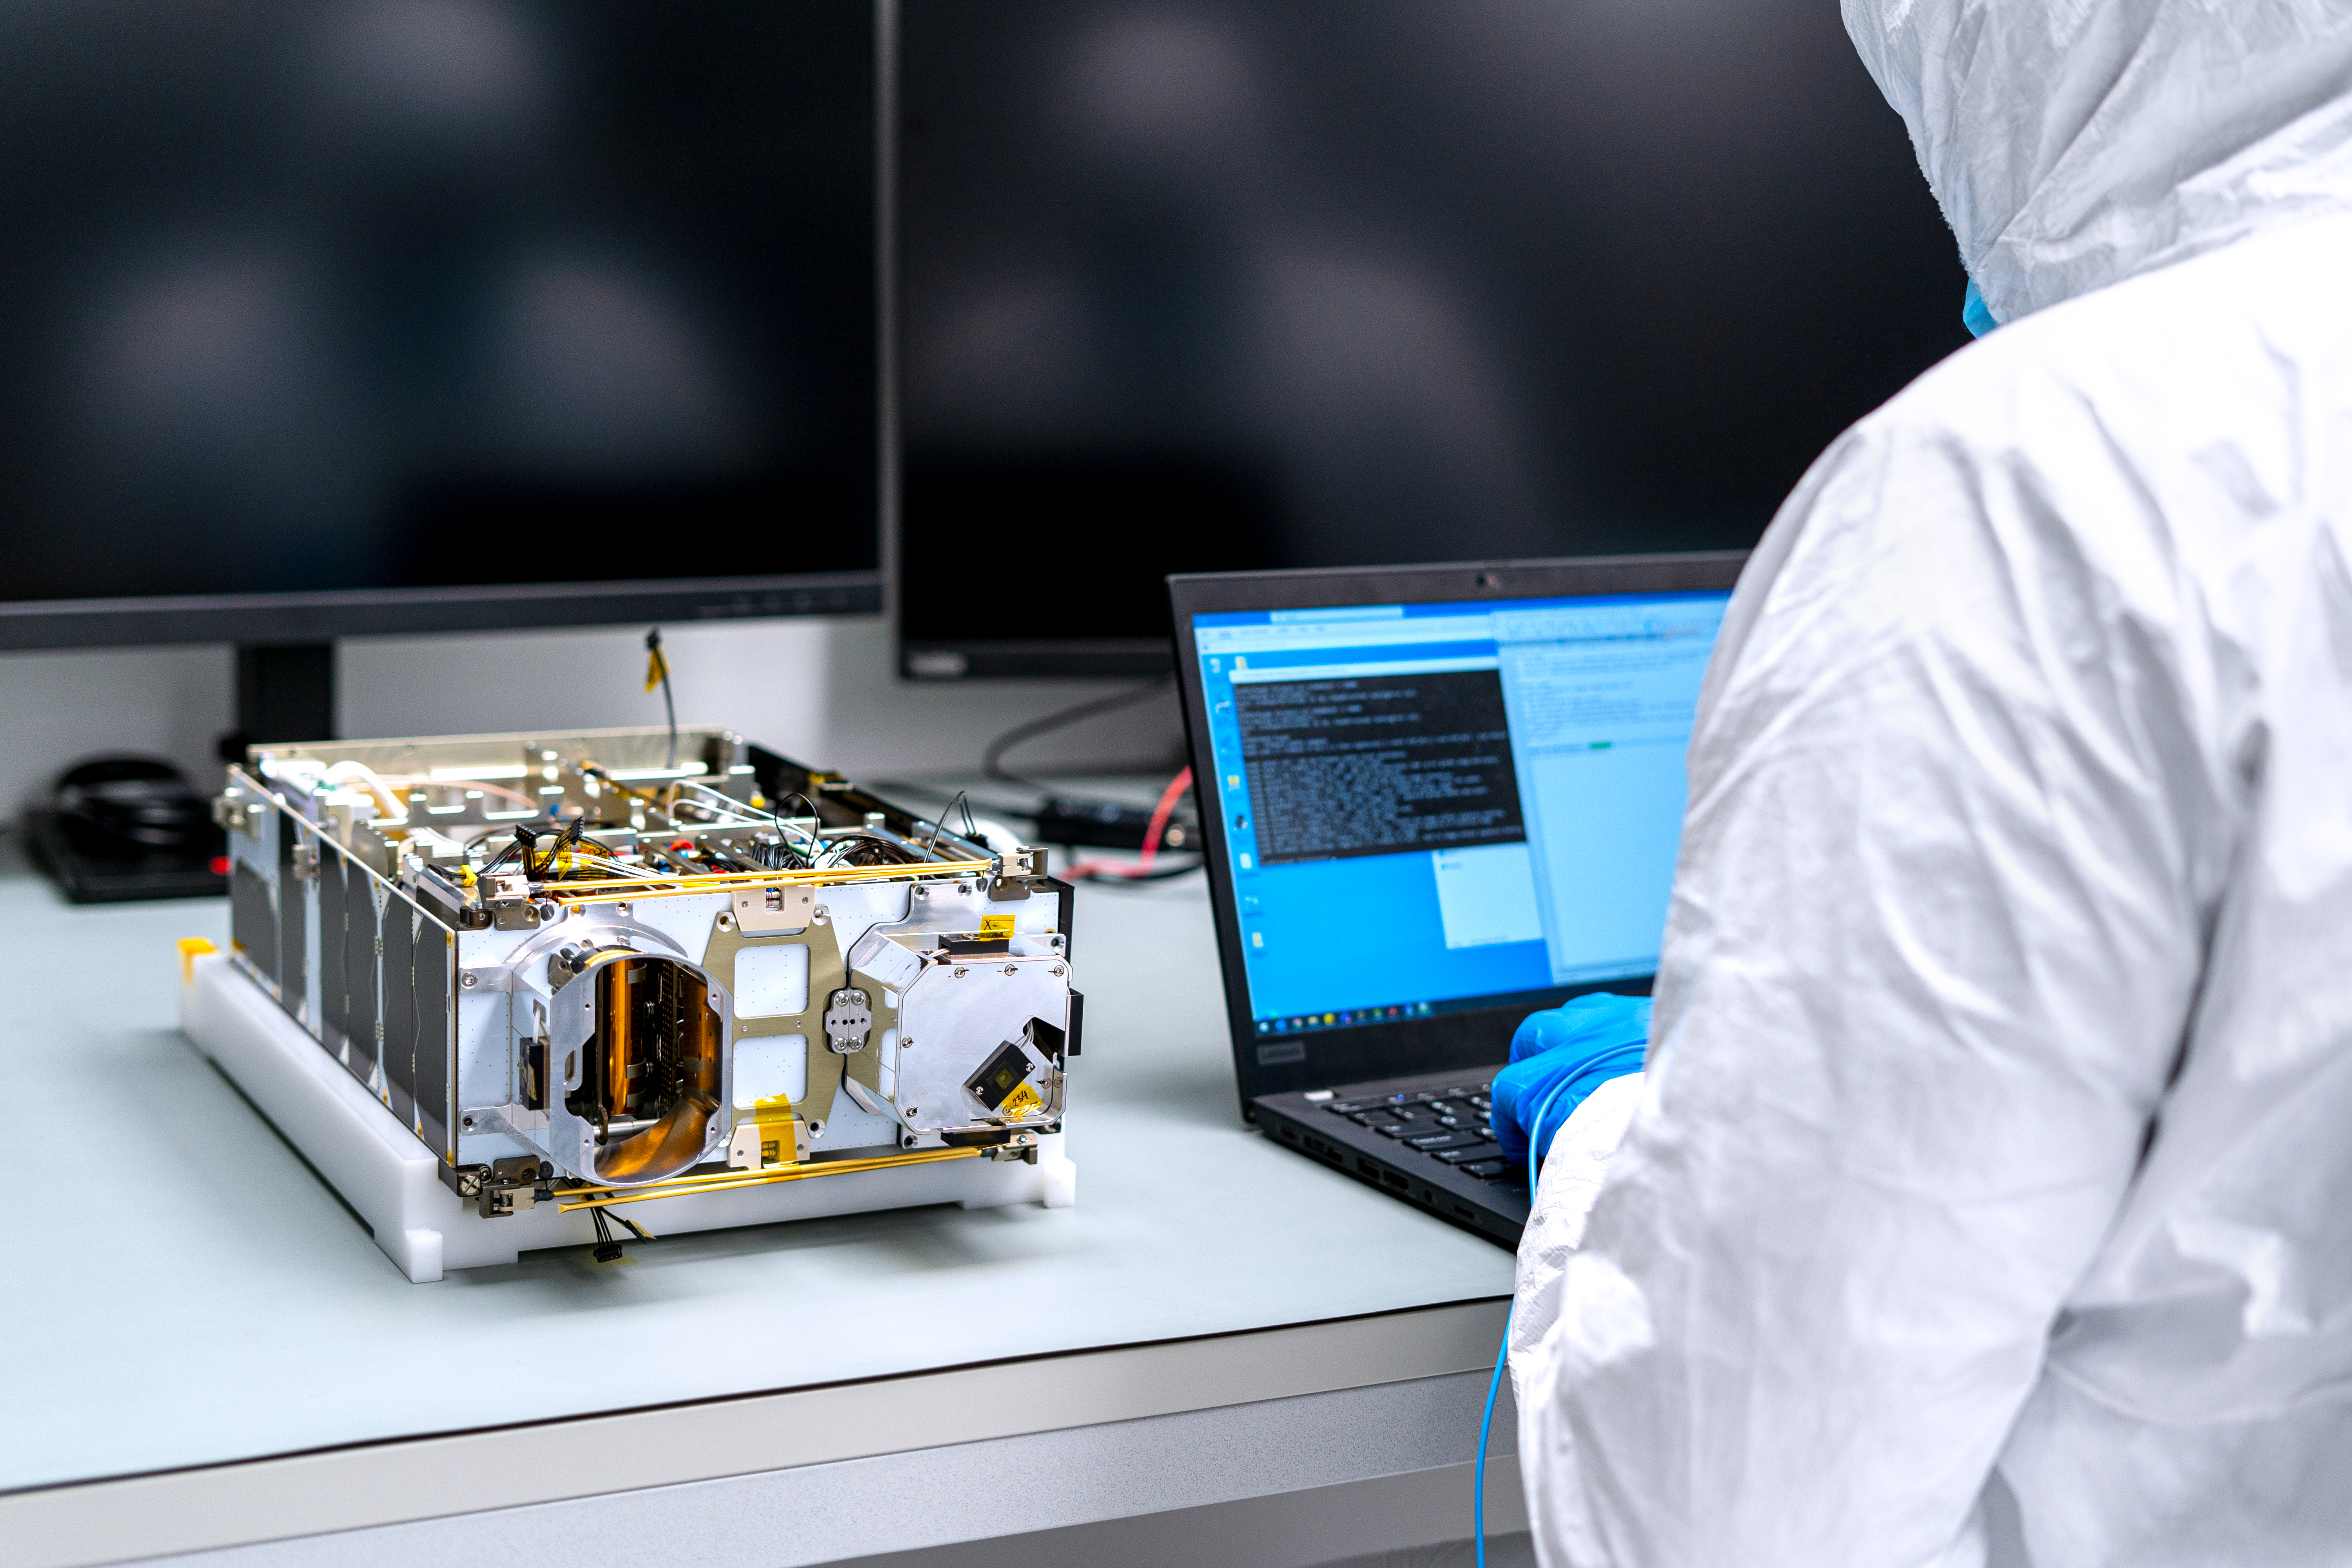 MACSAT Satellite during assembly (courtesy Nanoavionics & OQ Technology)